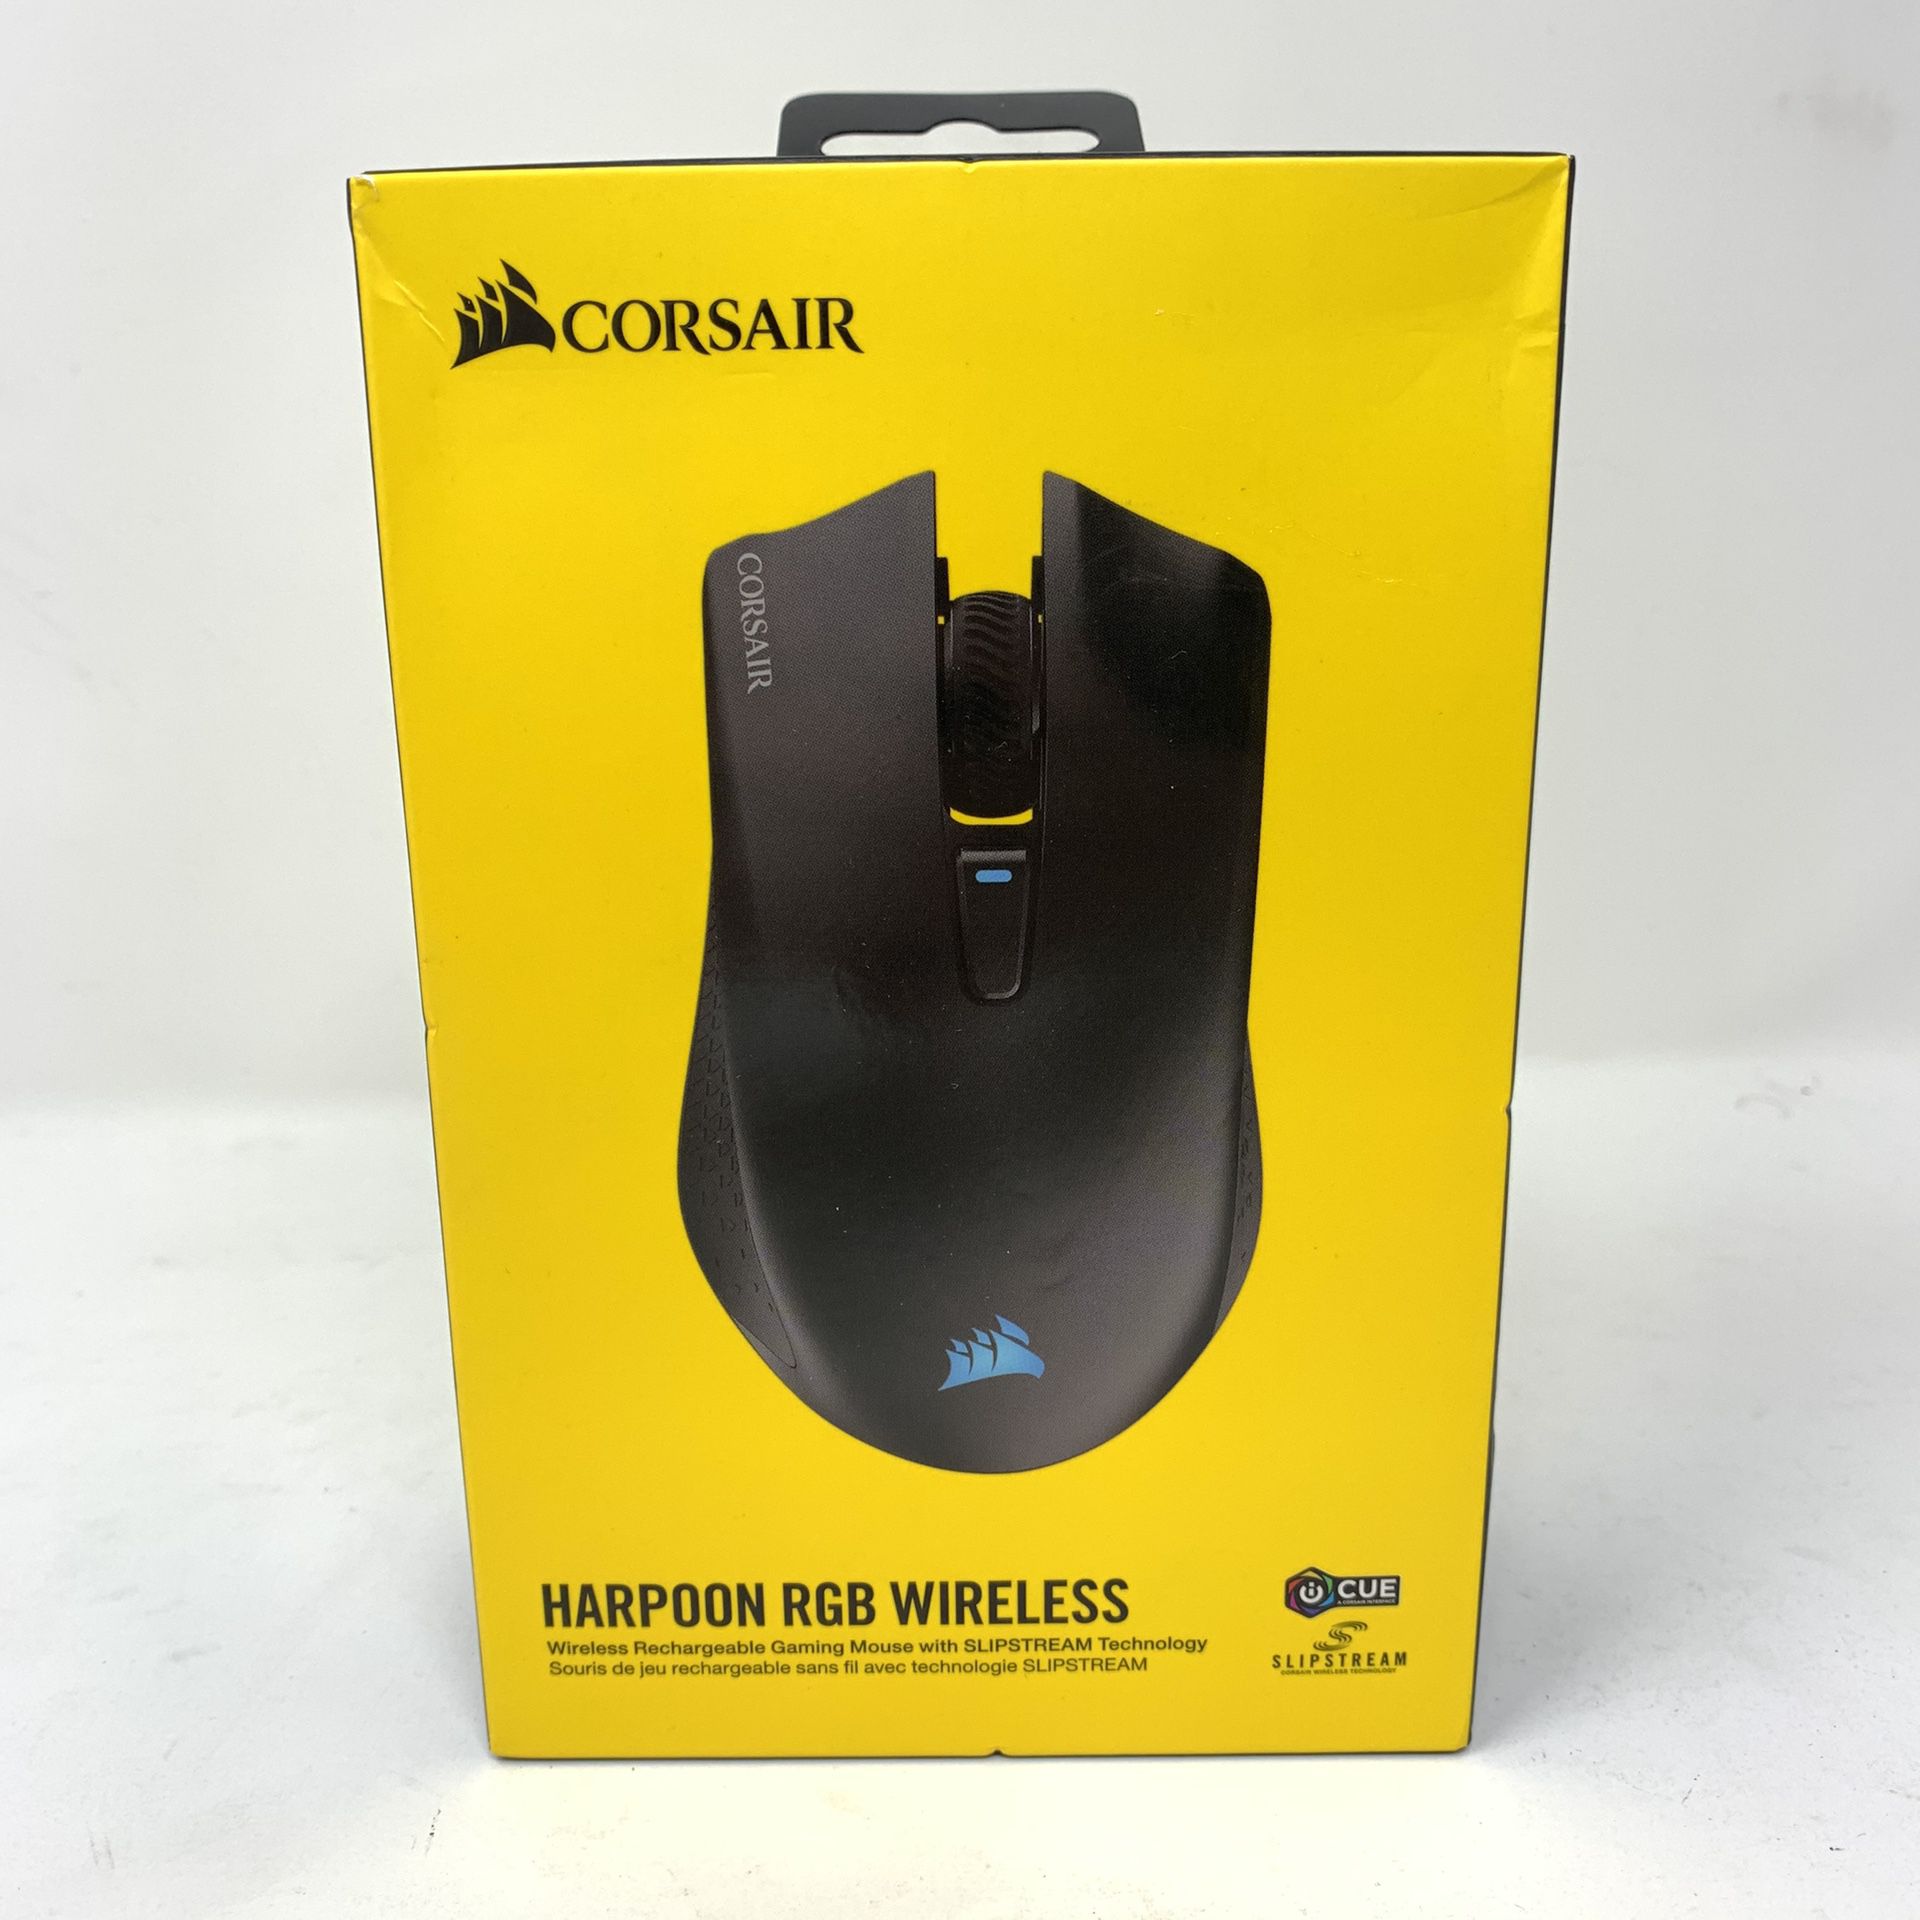 Corsair Harpoon RGB Wireless gaming mouse